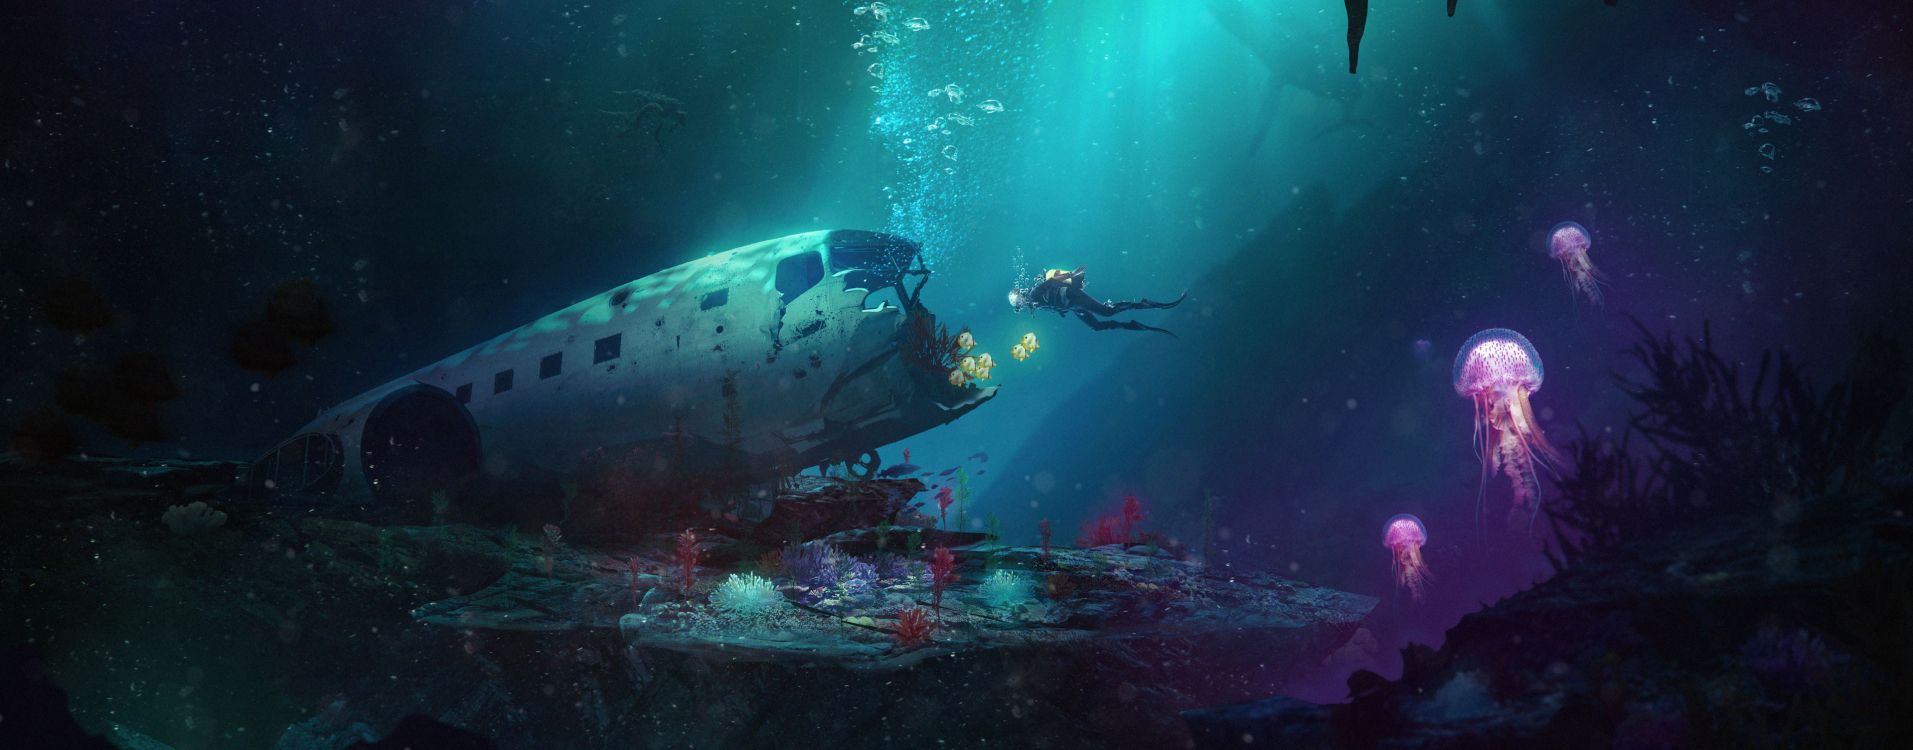 Wallpaper Underwater, Underwater Environment, Water, Art, Scuba Diving, Background Free Image